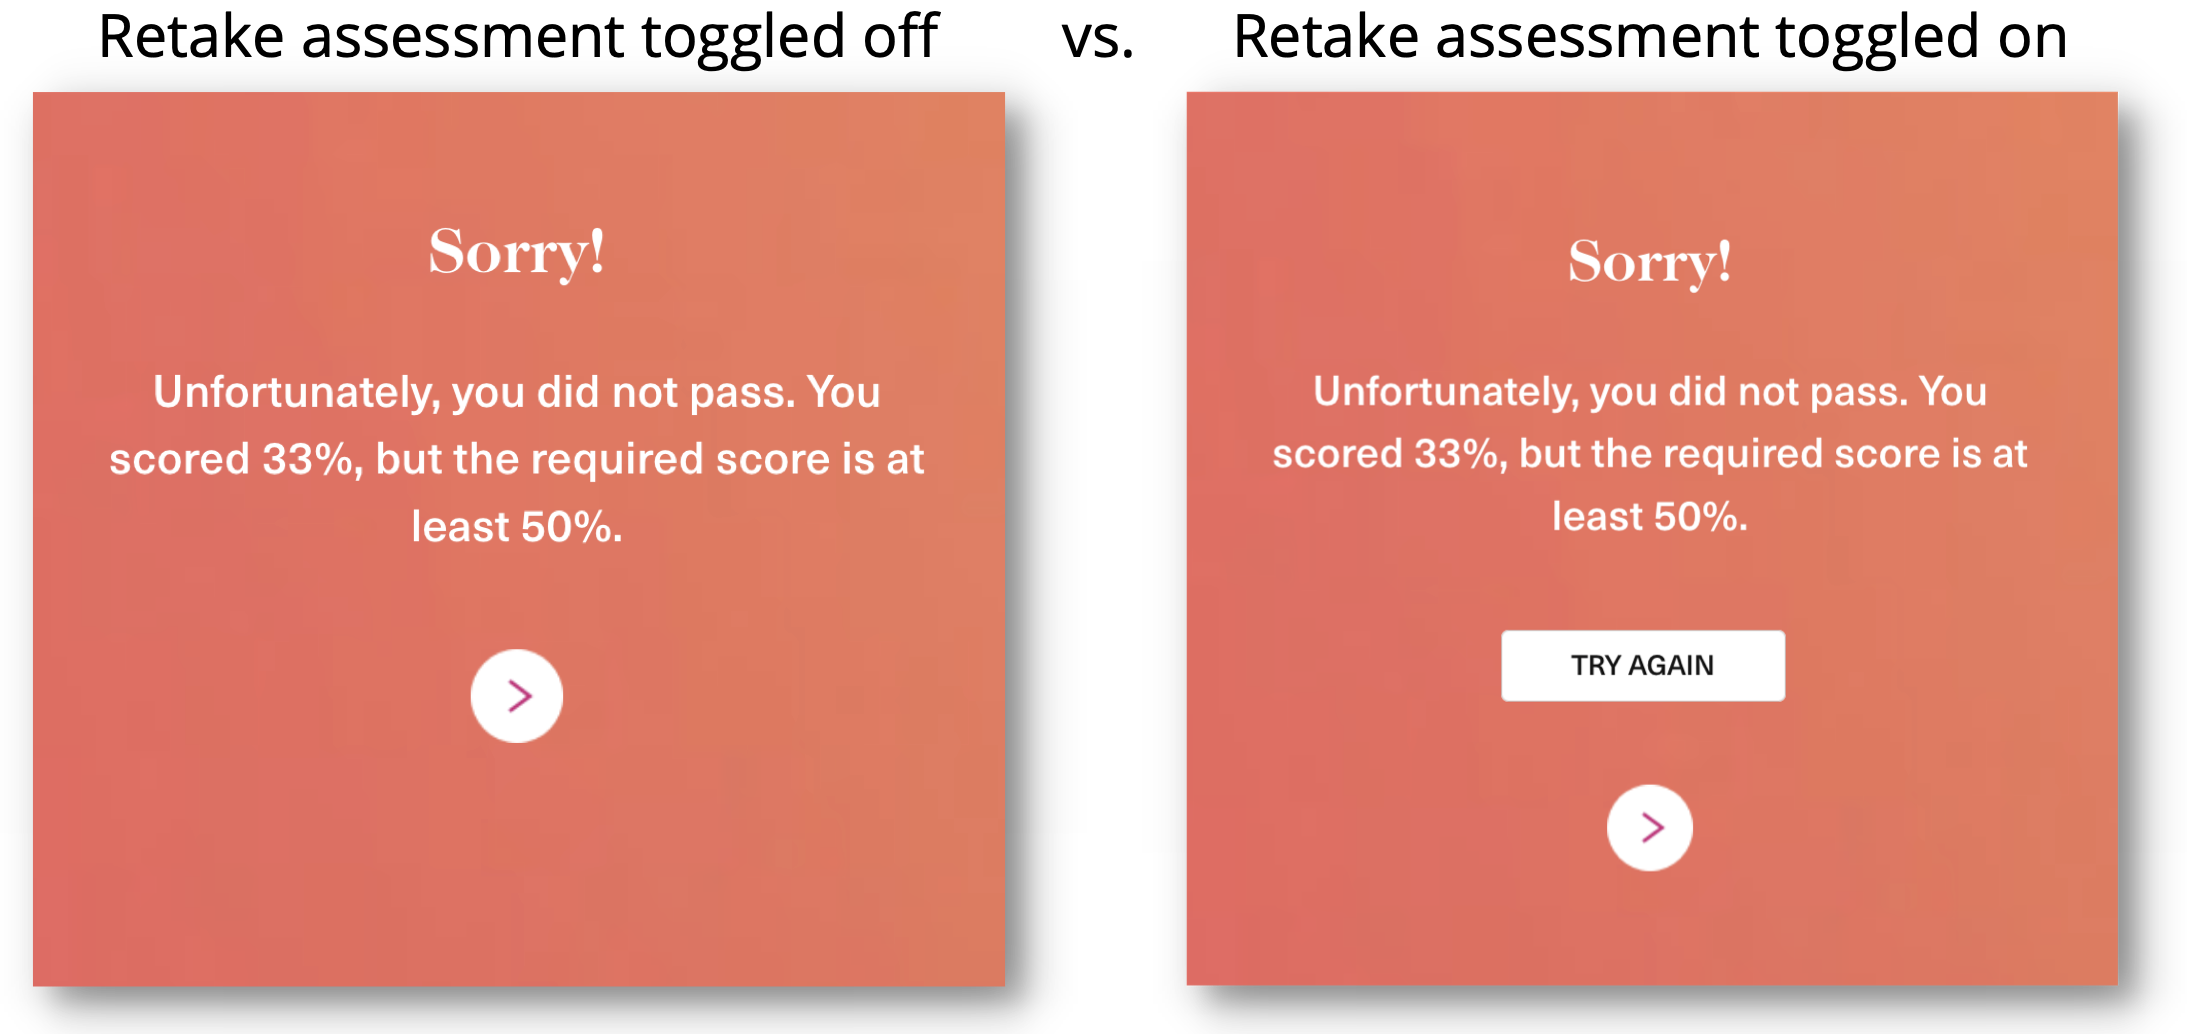 Retake_assessment_toggled_off.png